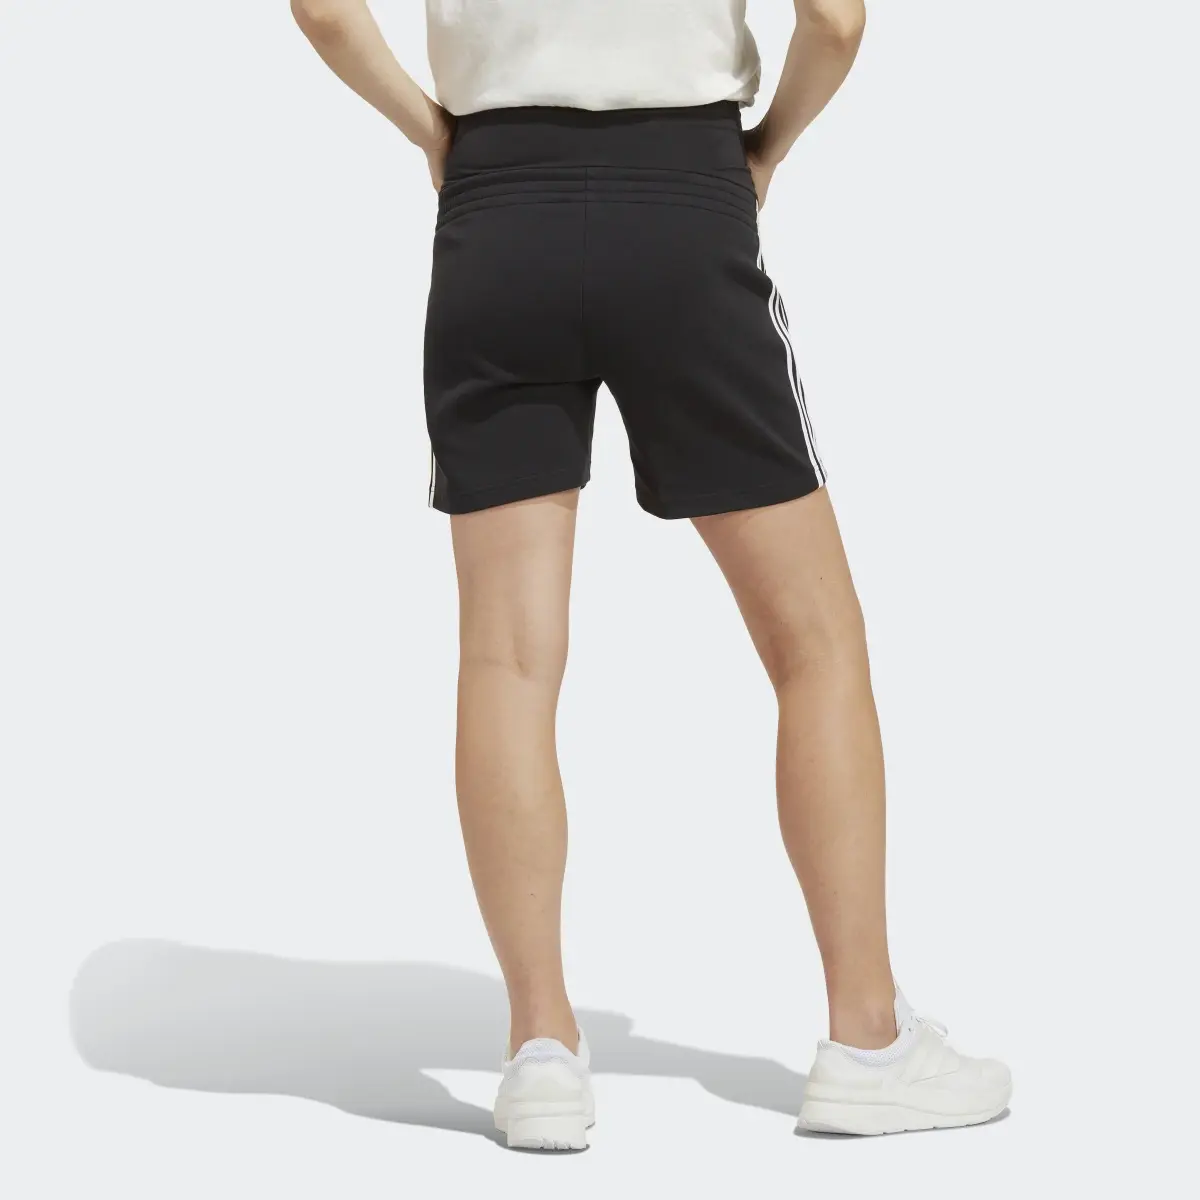 Adidas Maternity Shorts. 2